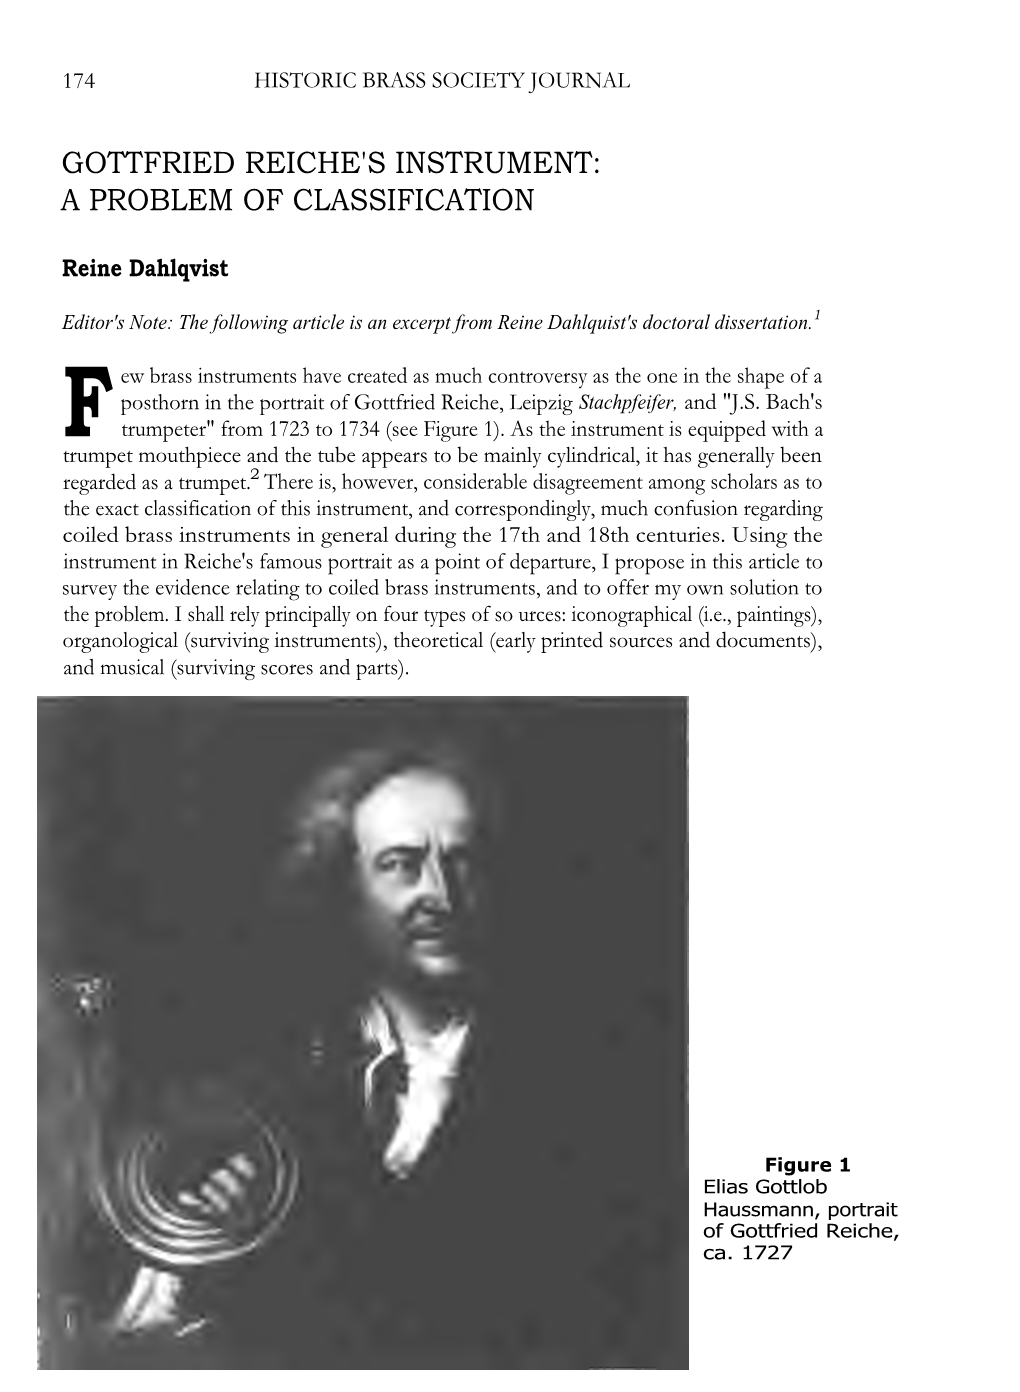 Gottfried Reiche's Instrument: a Problem of Classification